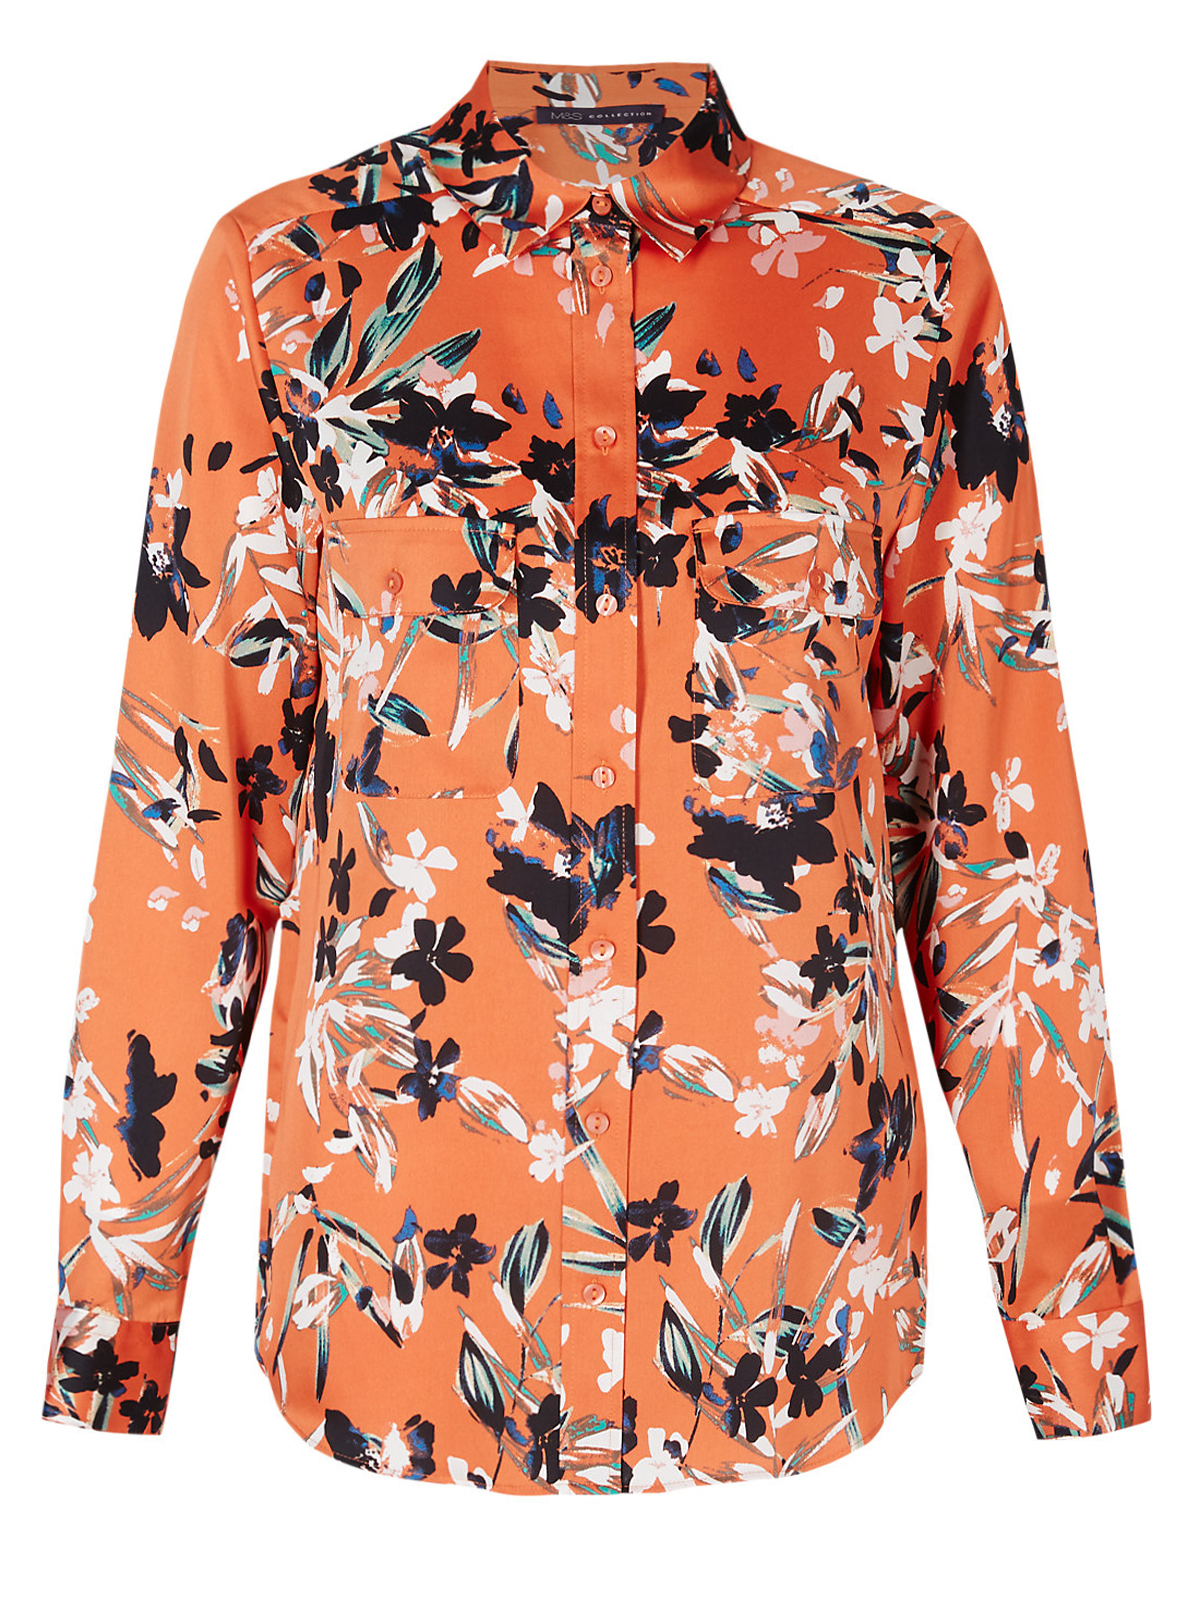 Marks and Spencer - - M&5 ORANGE Floral Print Long Sleeve Shirt - Size ...